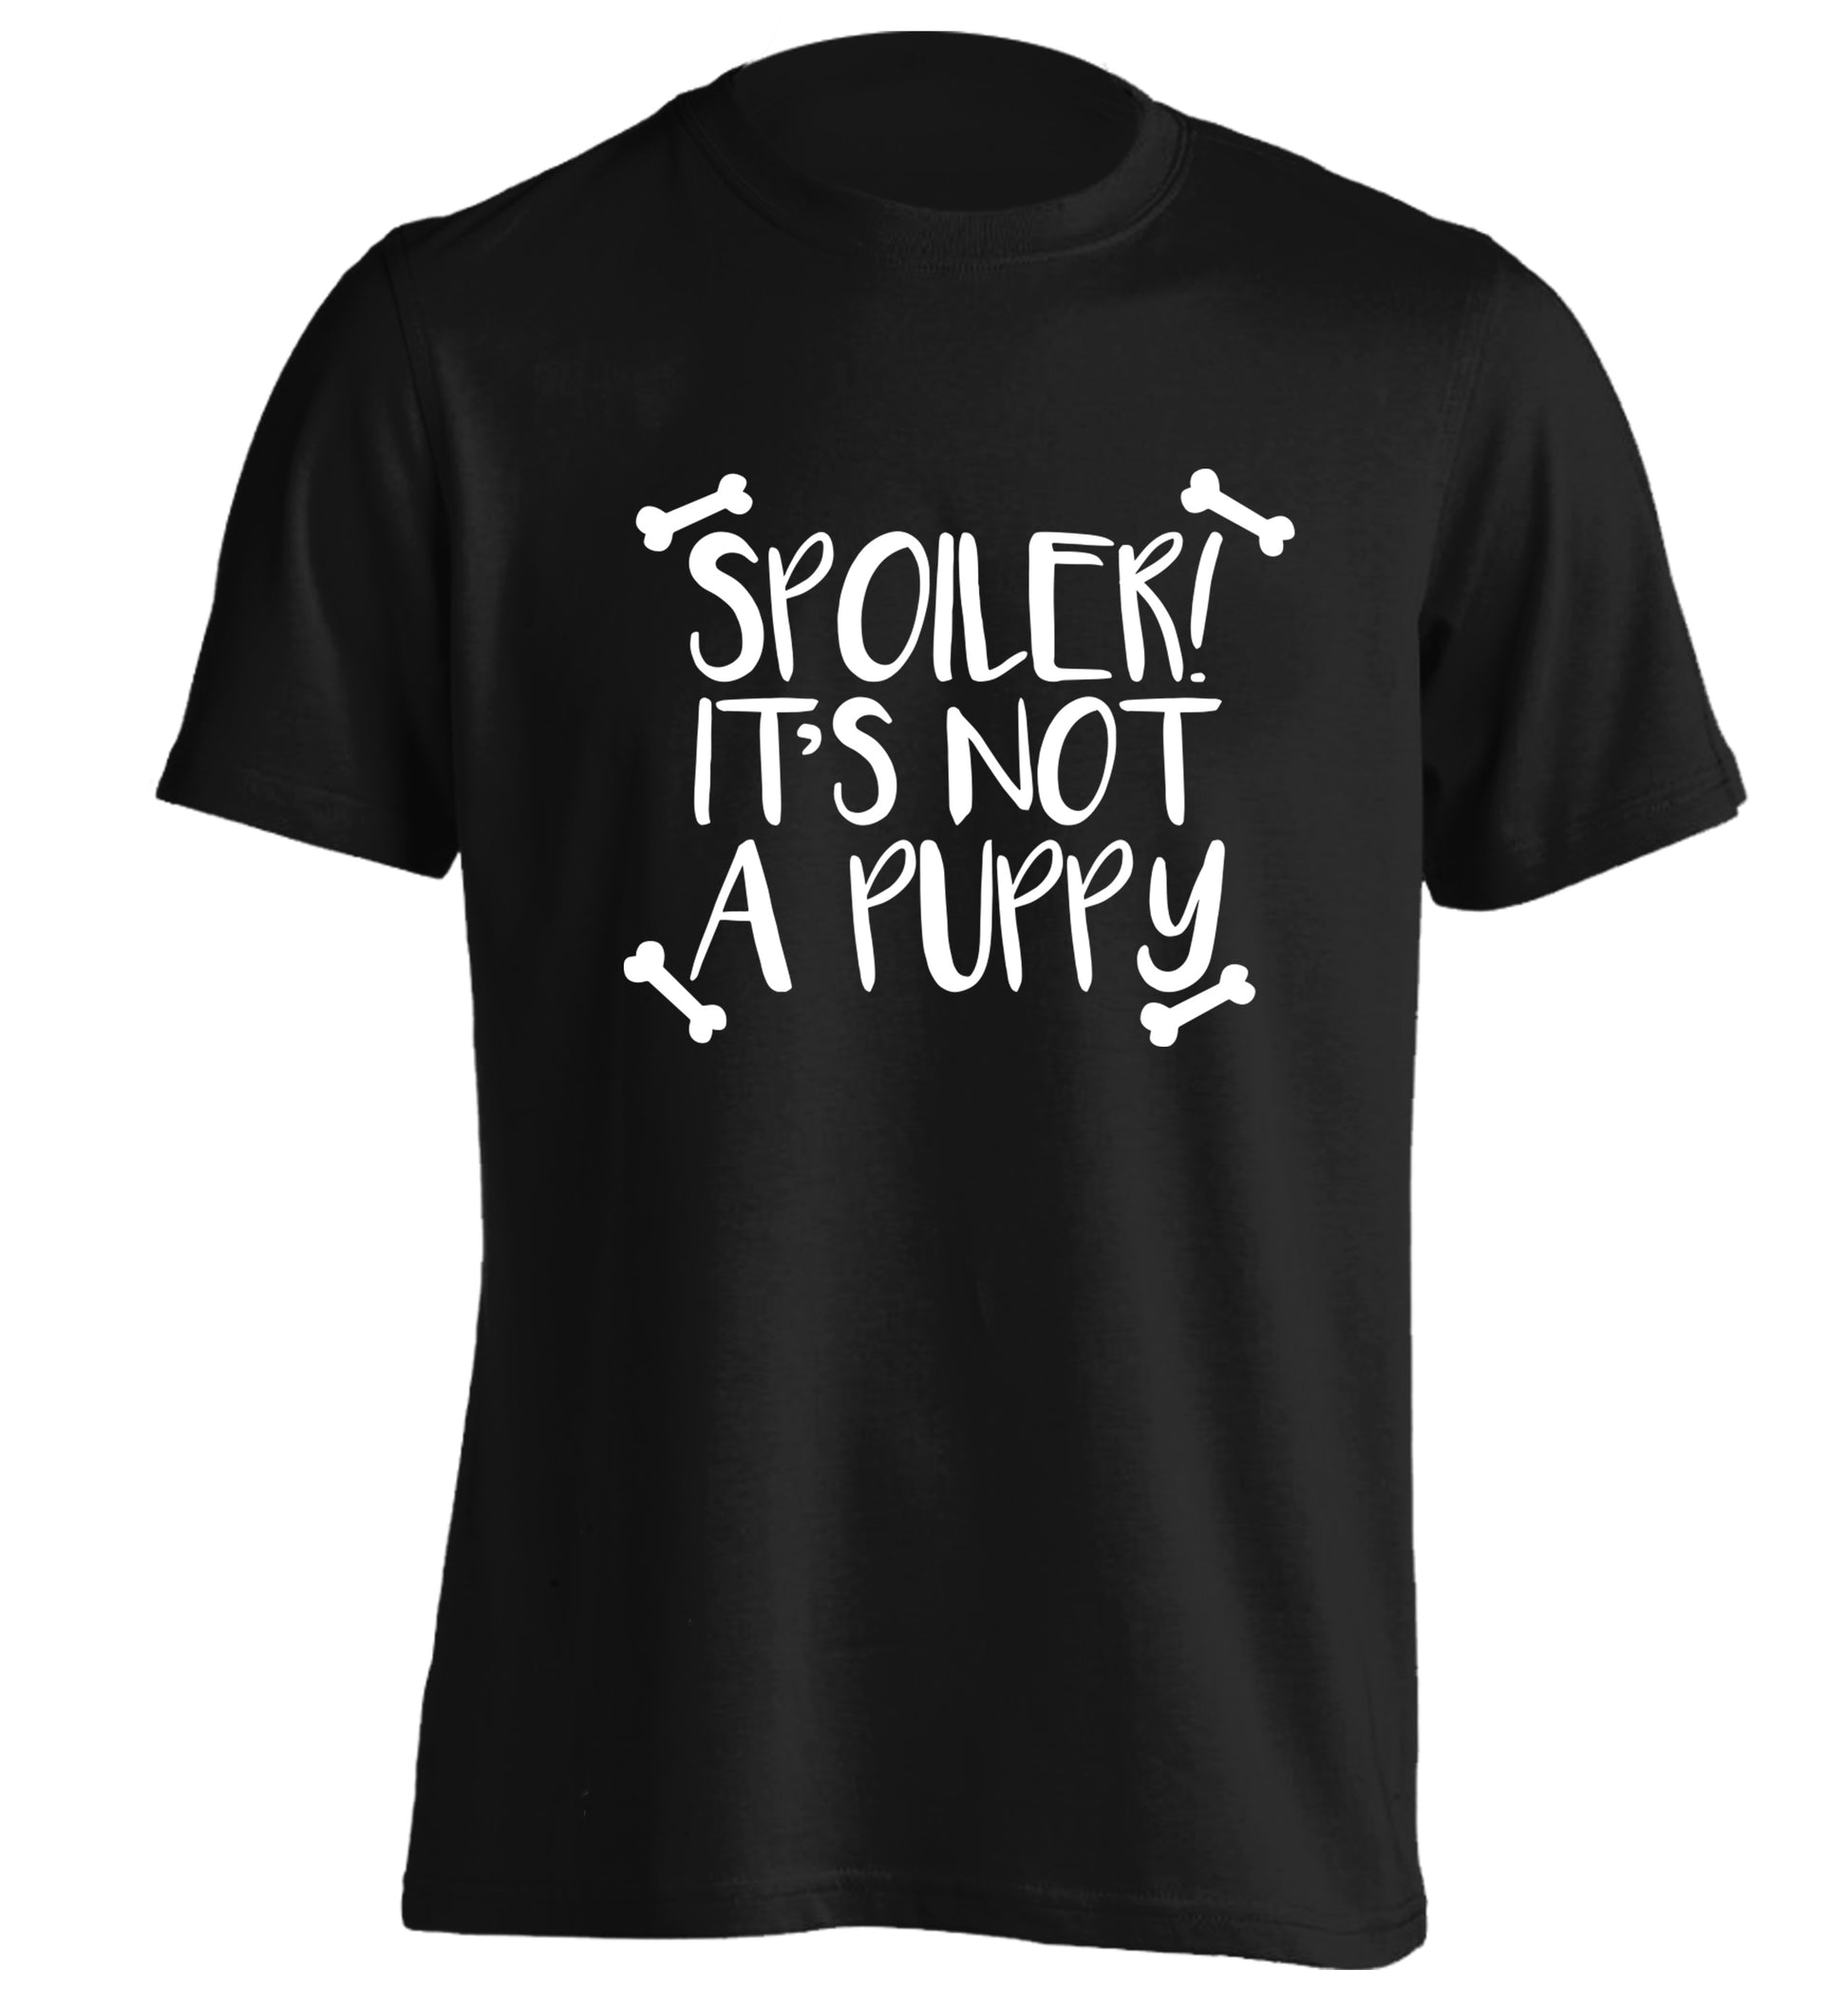 Spoiler it's not a puppy adults unisex black Tshirt 2XL